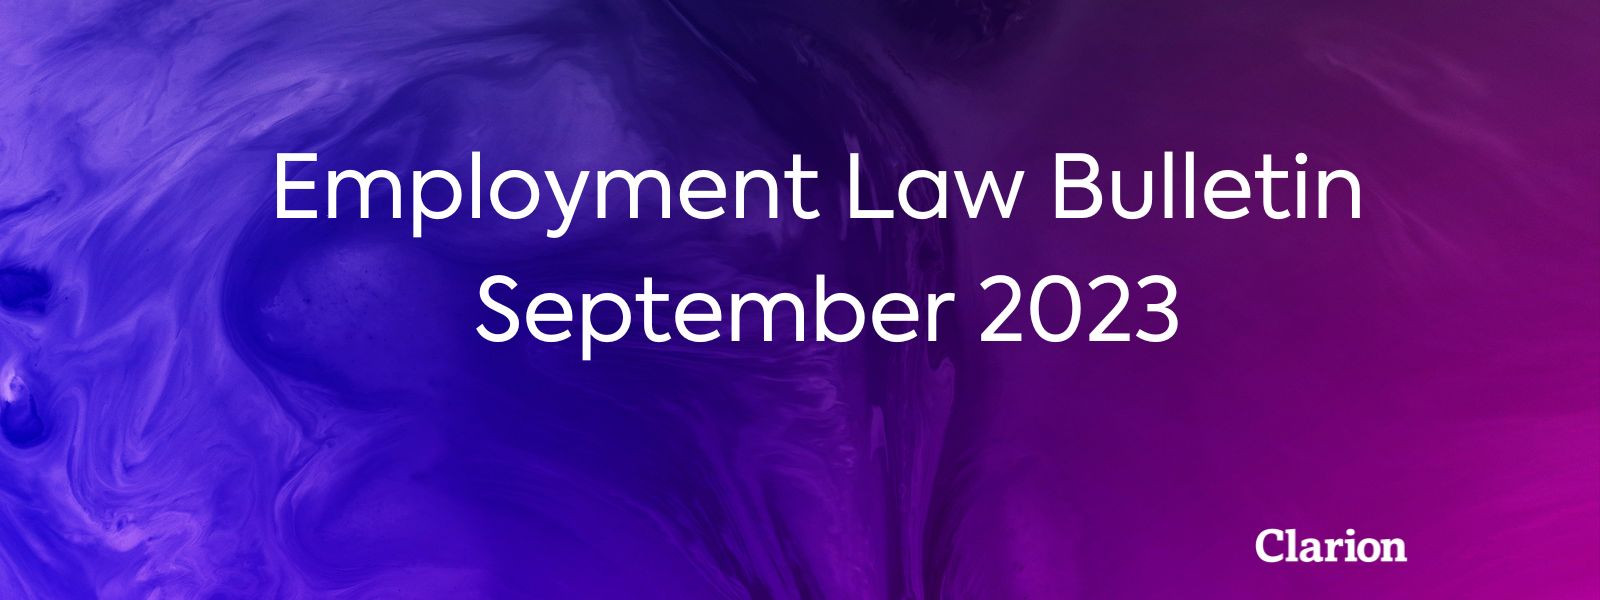 Employment Law Bulletin September 2023